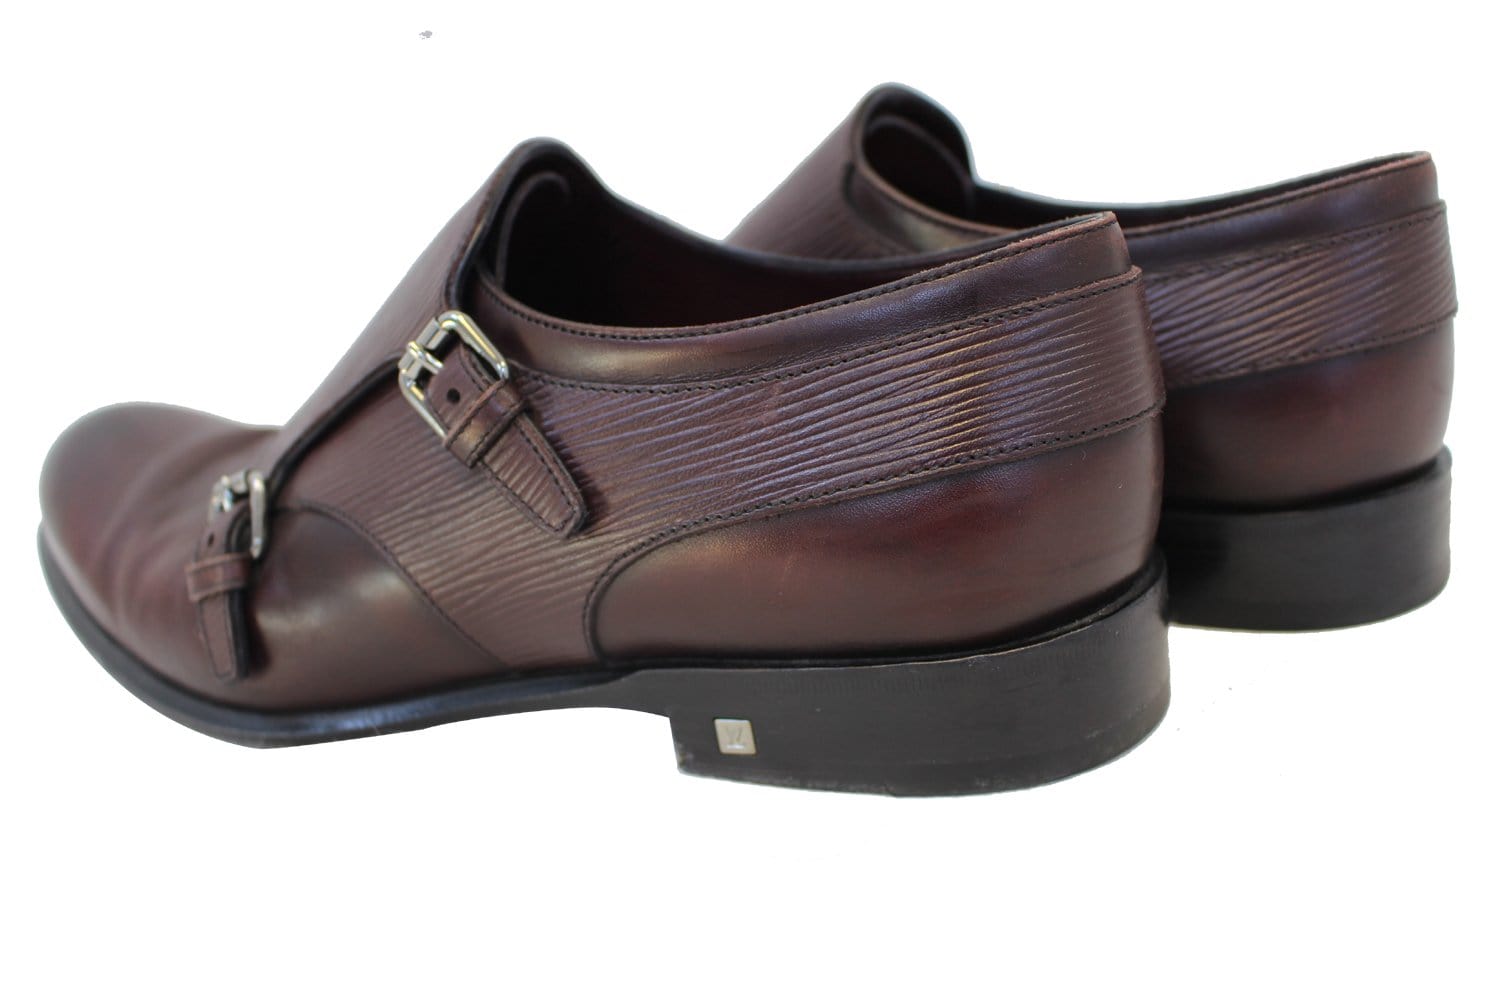 Louis Vuitton - Buckled shoes - Size: Shoes / EU 38 - Catawiki